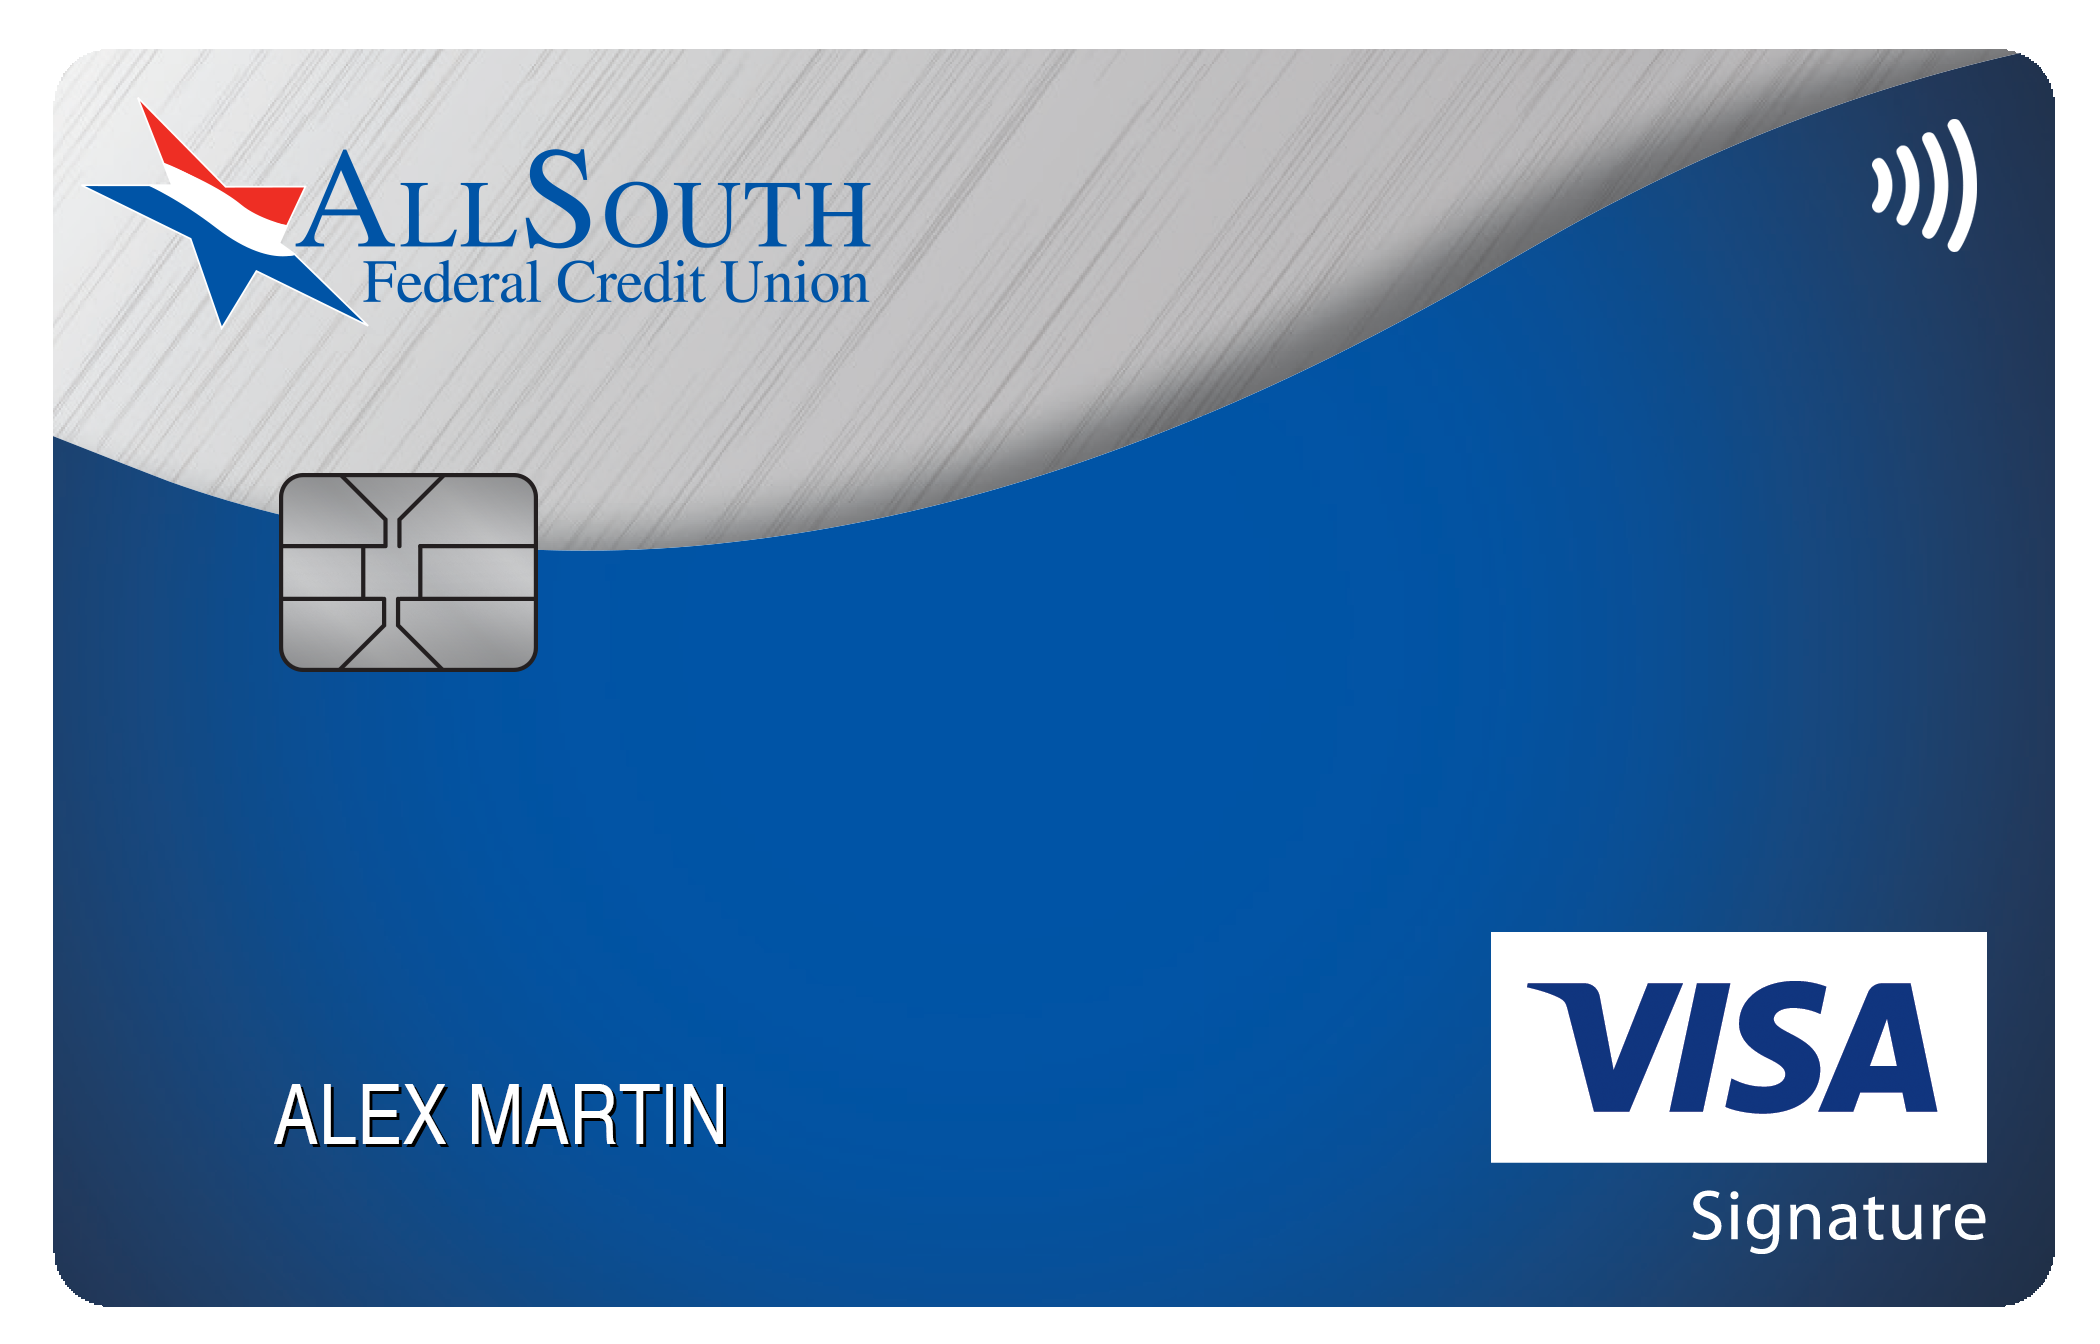 AllSouth Federal Credit Union Travel Rewards+ Card